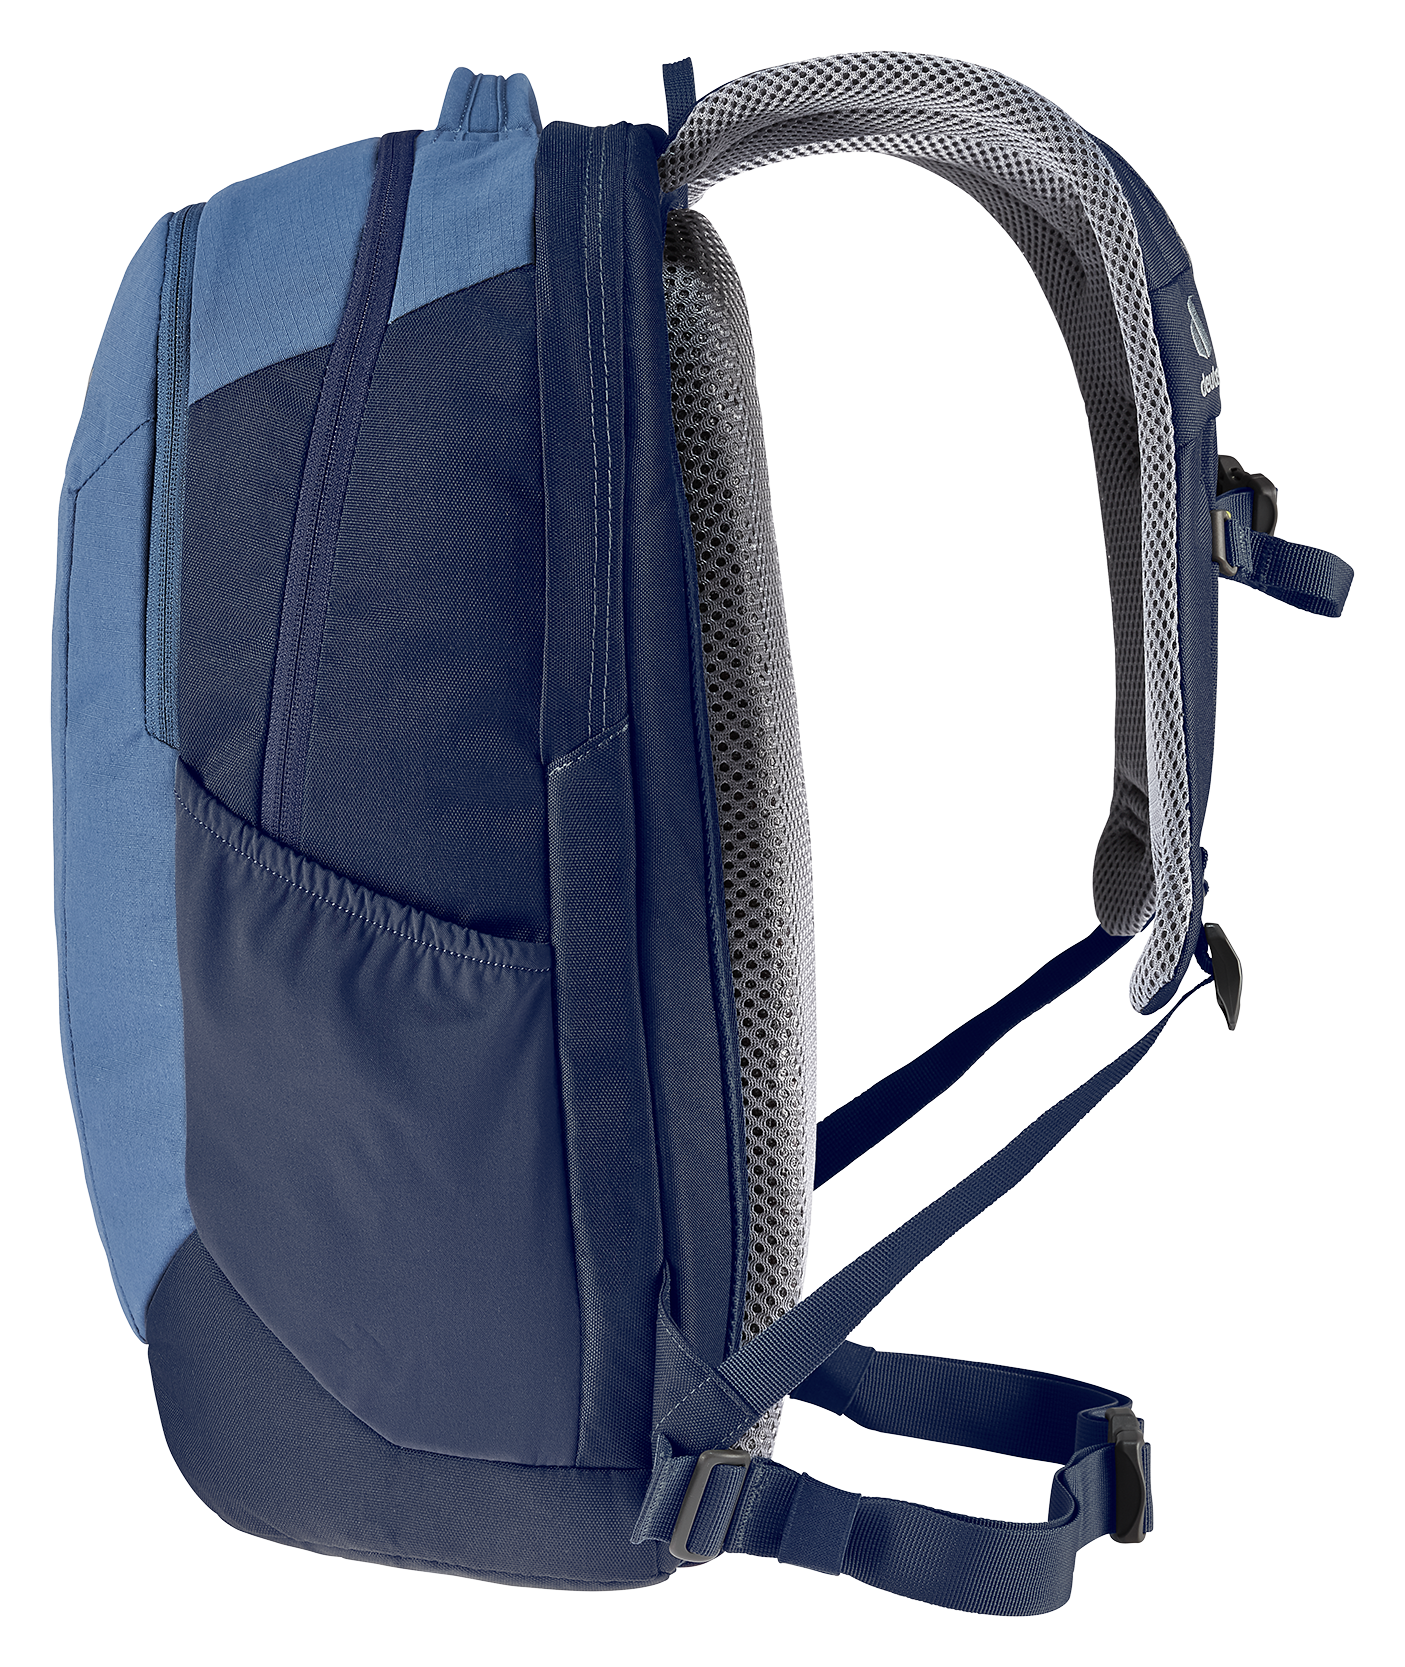 Vaultz Storage Mesh Zipper Pouch Bags Blue and Green 2 Pack NEW